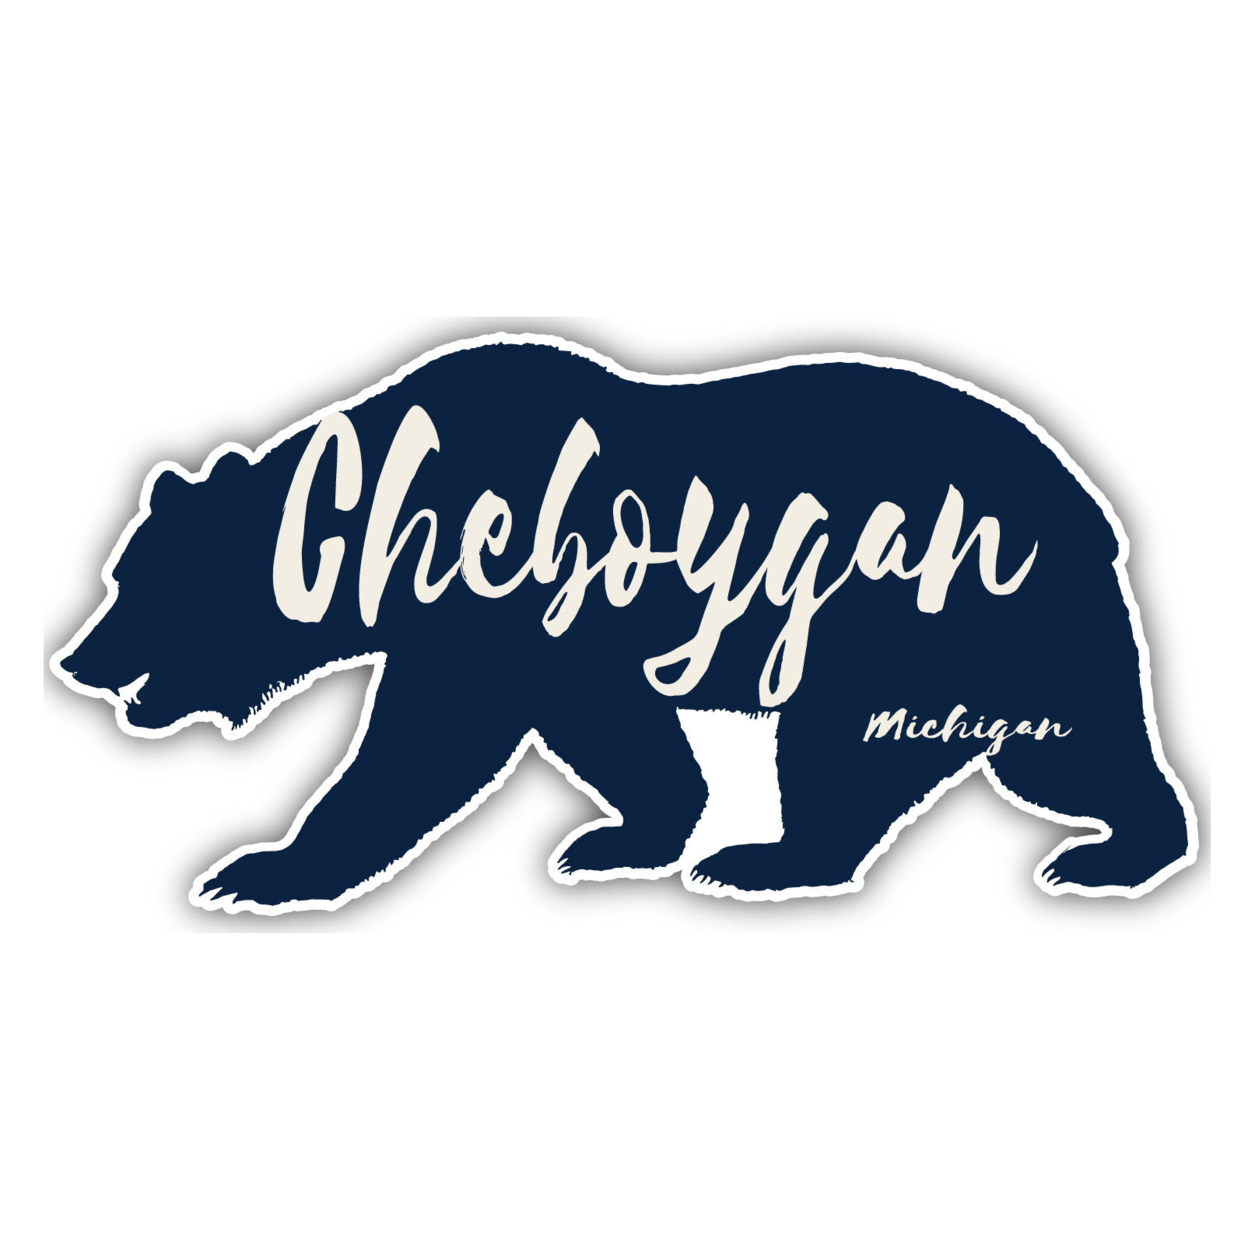 Cheboygan Michigan Souvenir Decorative Stickers (Choose Theme And Size) - 4-Pack, 10-Inch, Bear